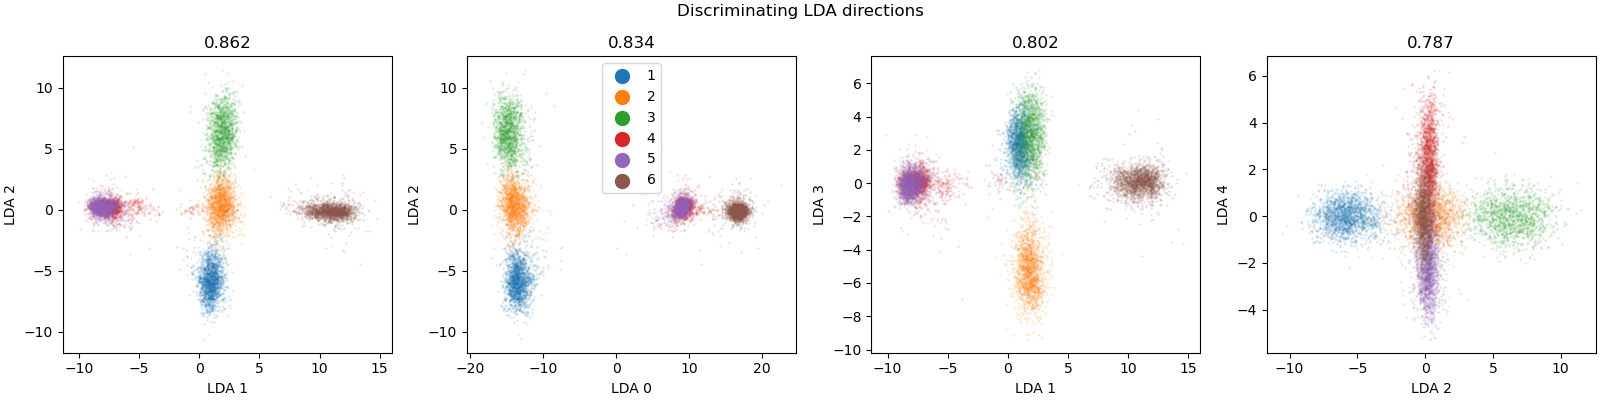 Discriminating LDA directions, 0.862, 0.834, 0.802, 0.787